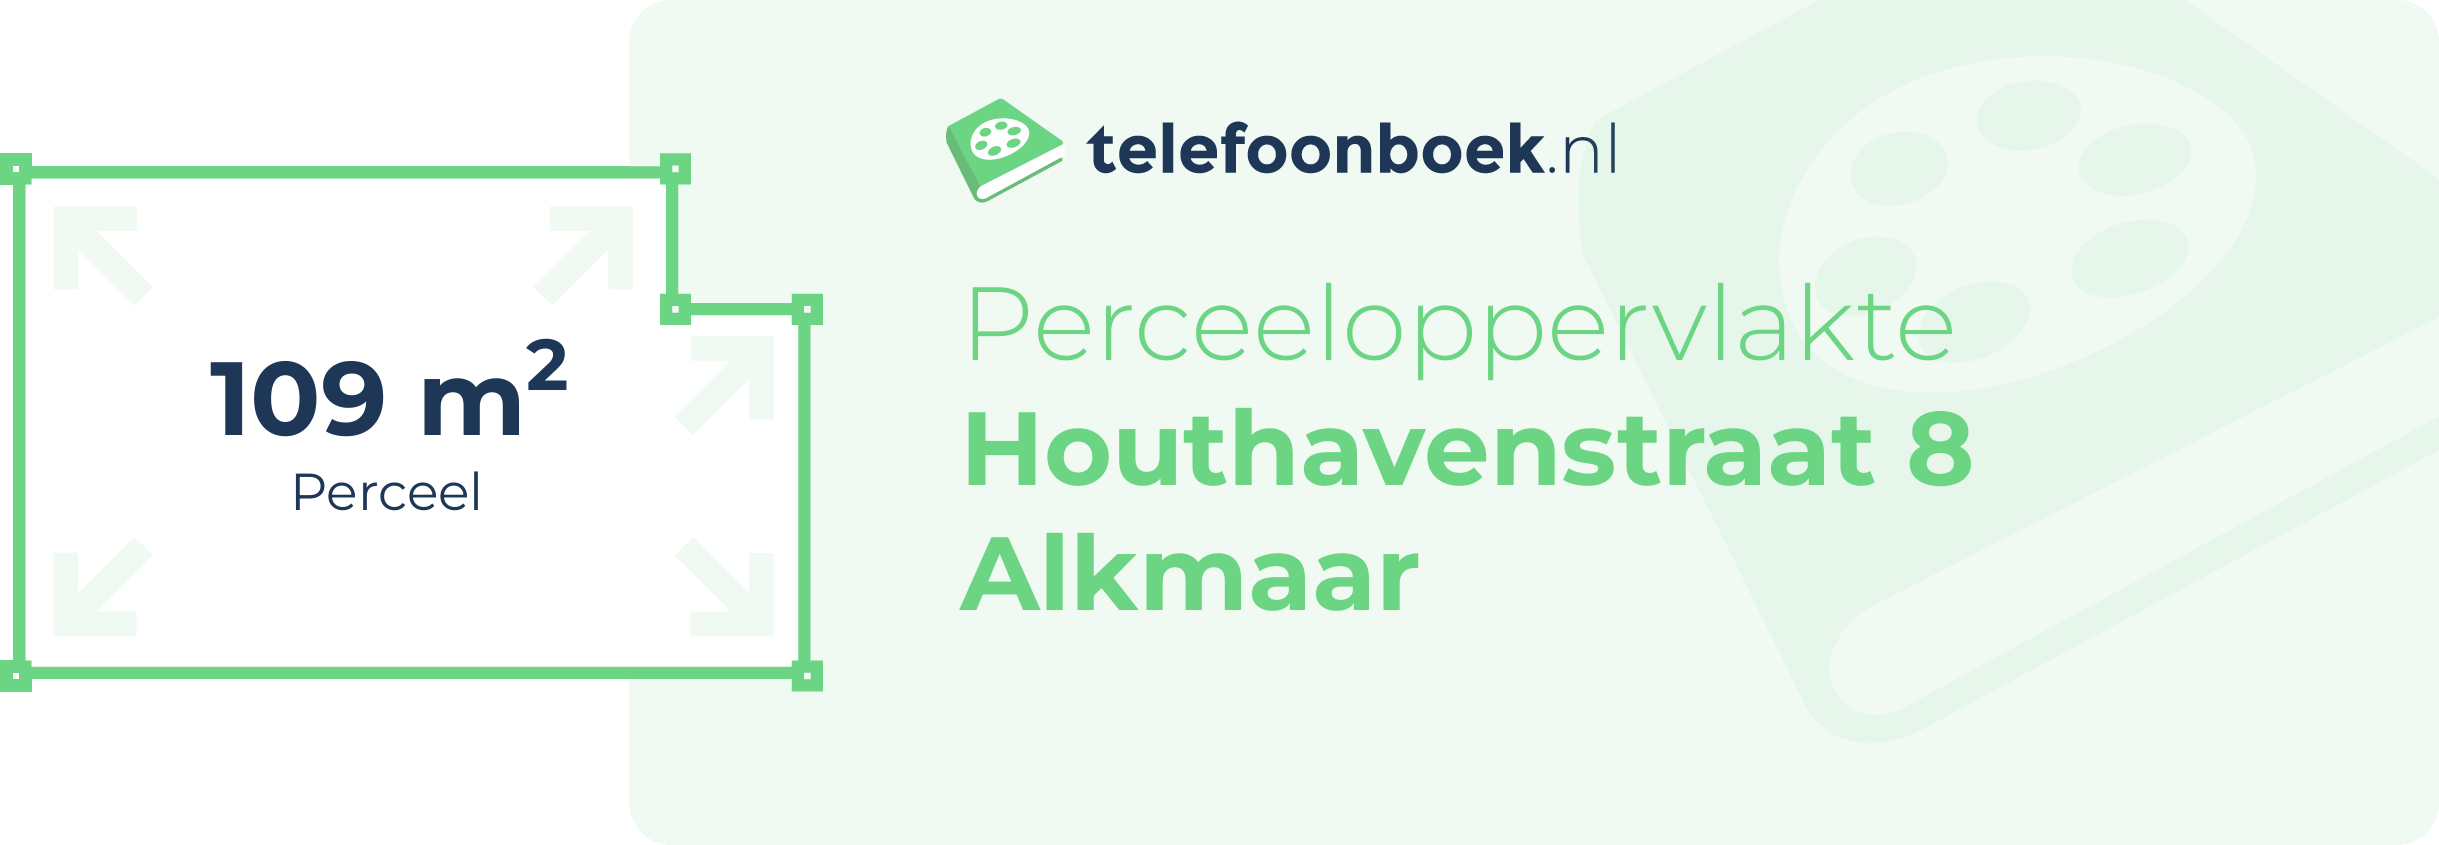 Perceeloppervlakte Houthavenstraat 8 Alkmaar